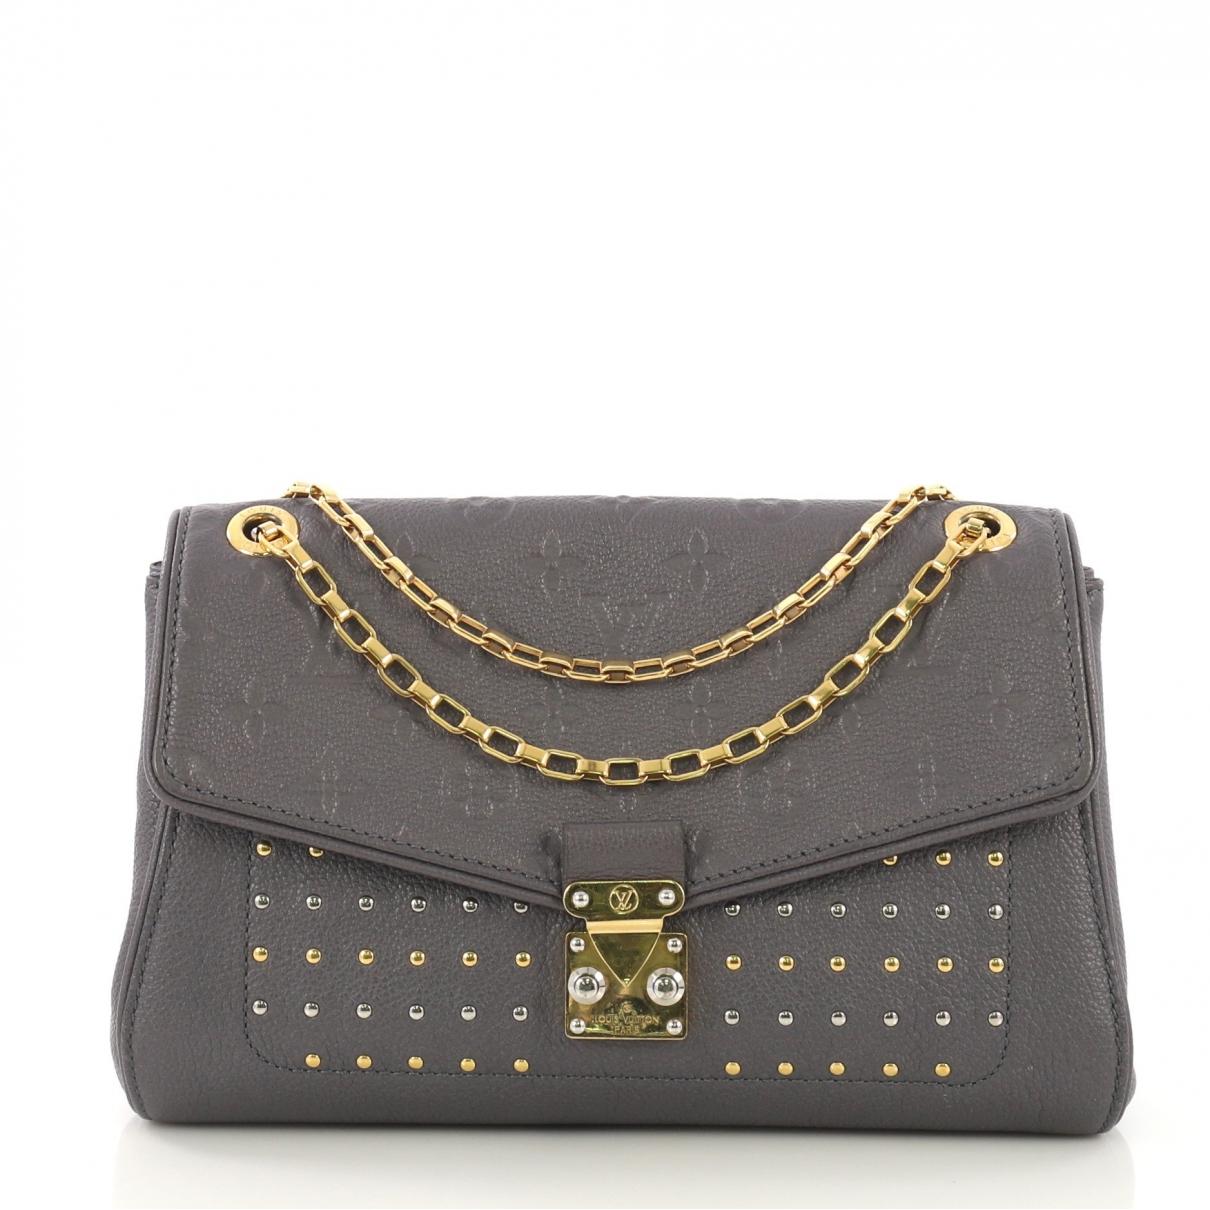 Louis Vuitton Saint-germain Grey Leather Handbag in Gray - Lyst